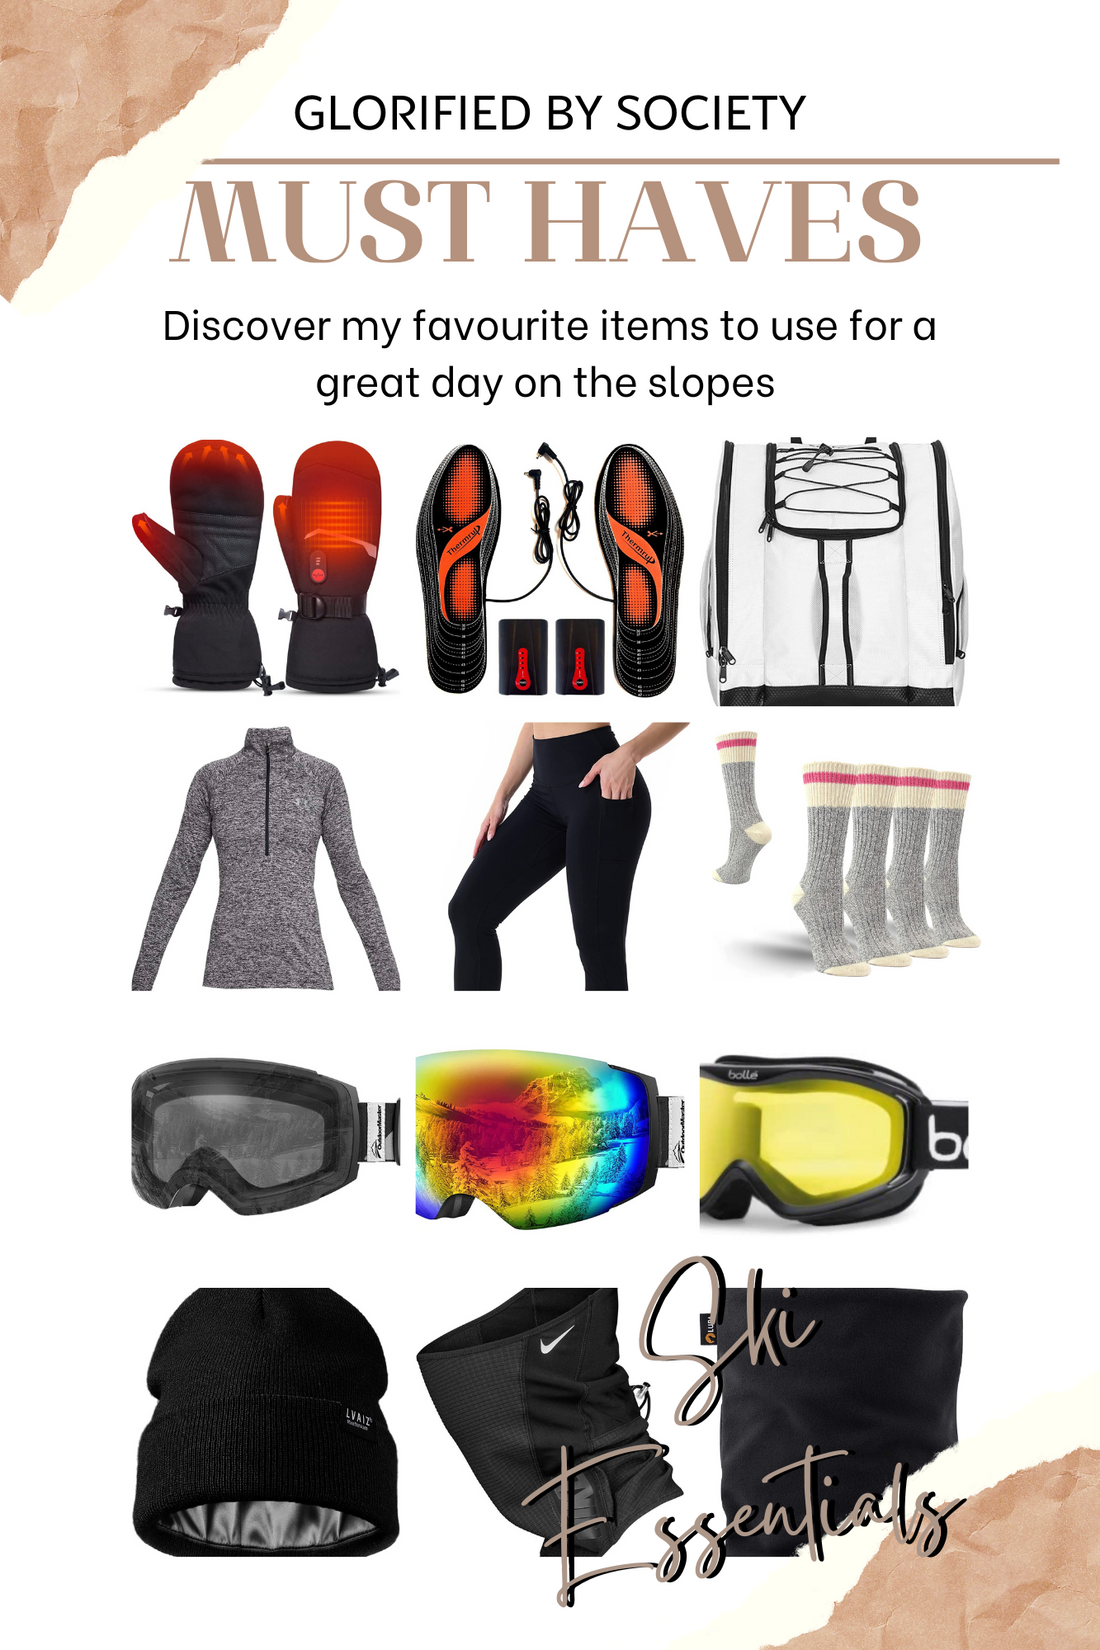 ski, ski gear, ski wear, gloves, insoles, boot bag, goggles, winter, sports, winter sports, beanie, curly hair